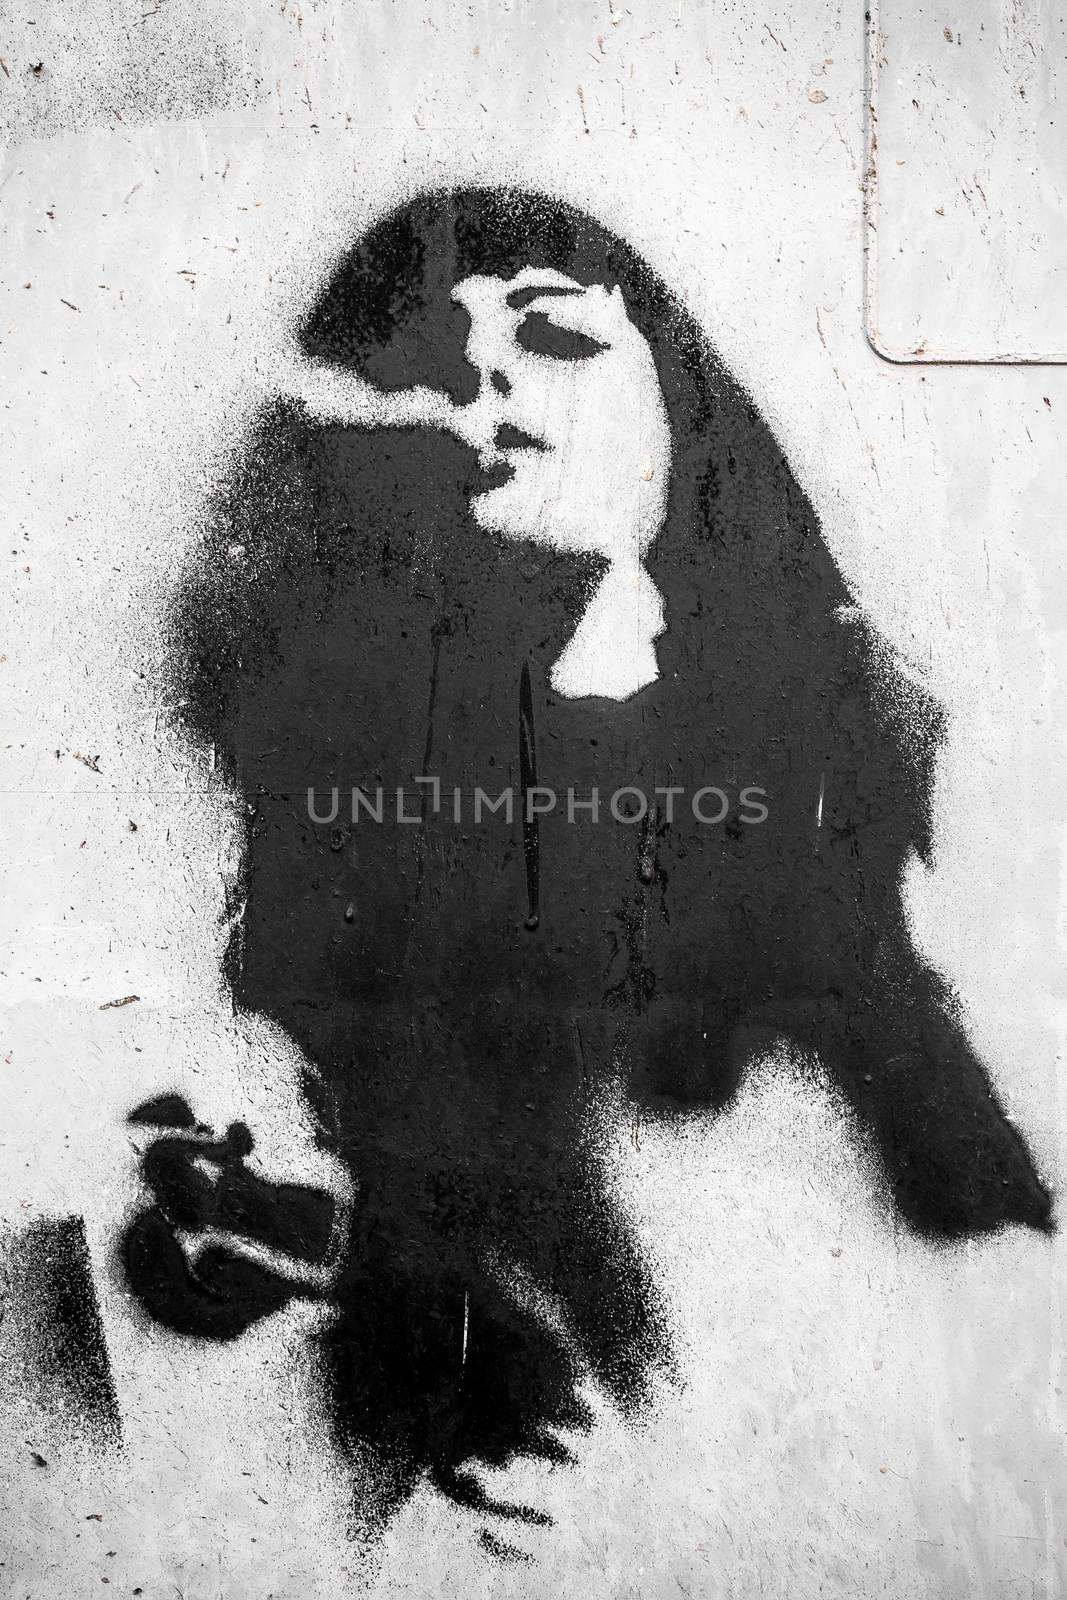 Graffiti on the wall of a woman who smokes.